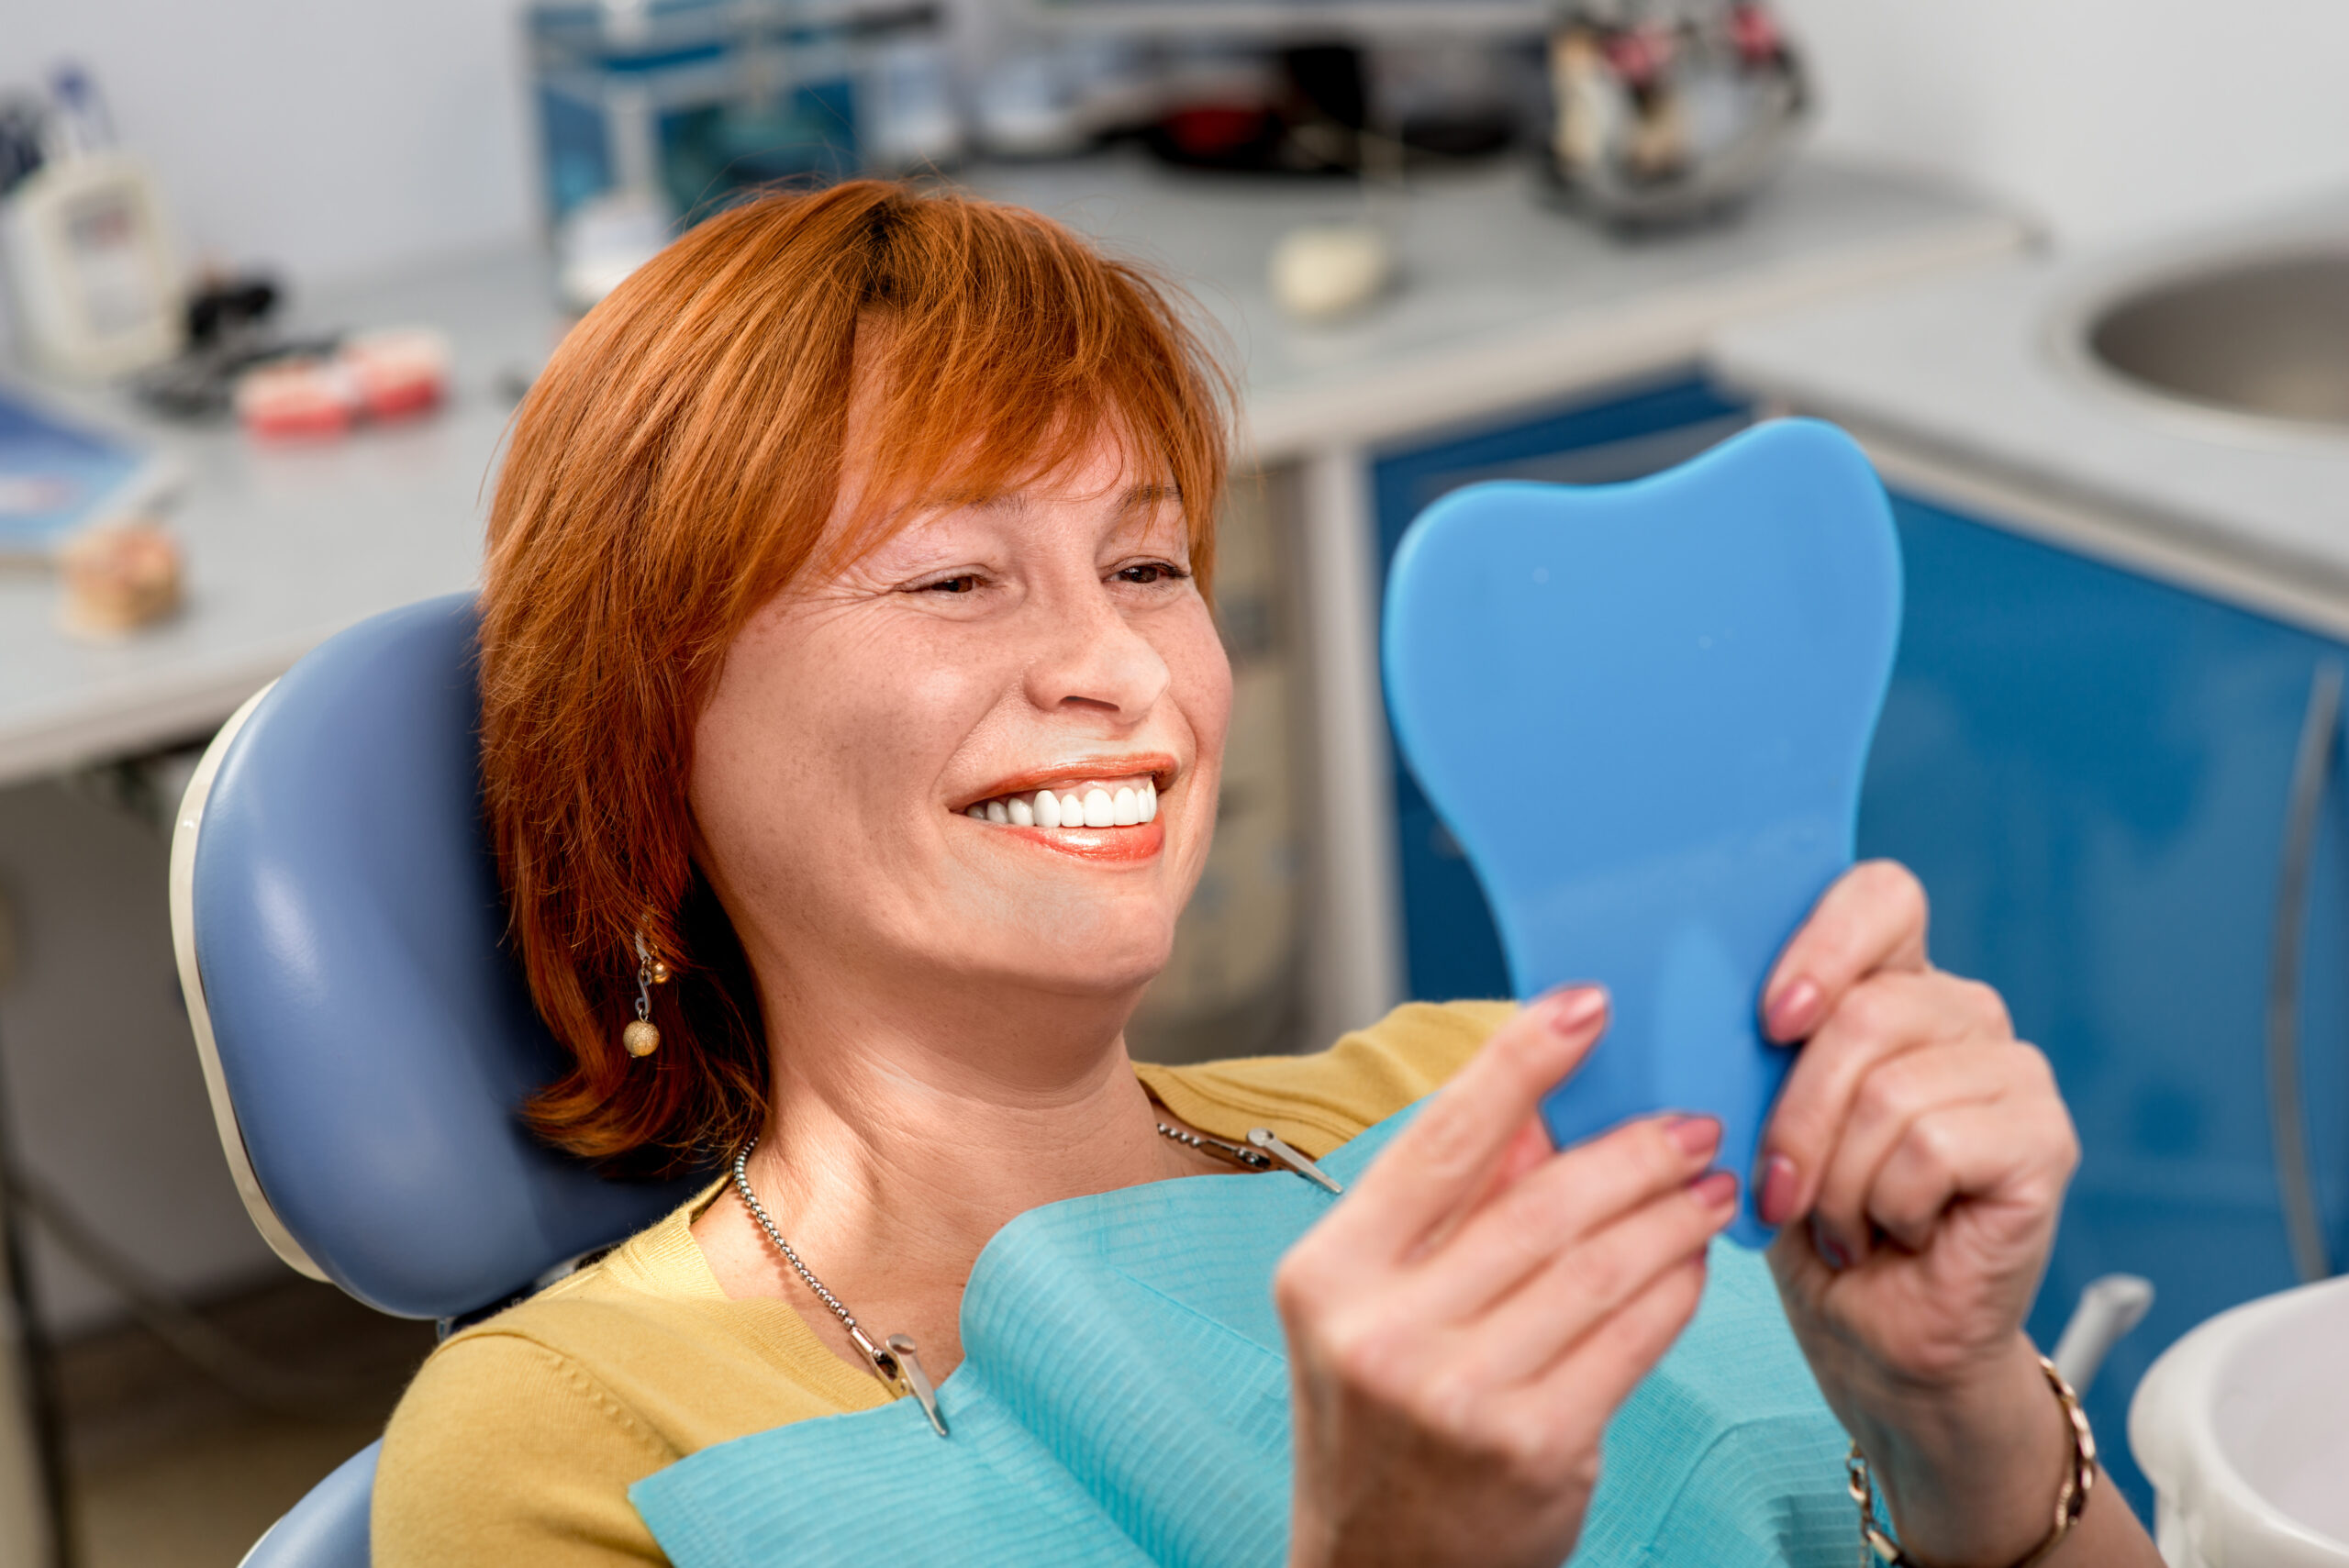 Teethxpress dental implants chattanooga periodontics dental implants